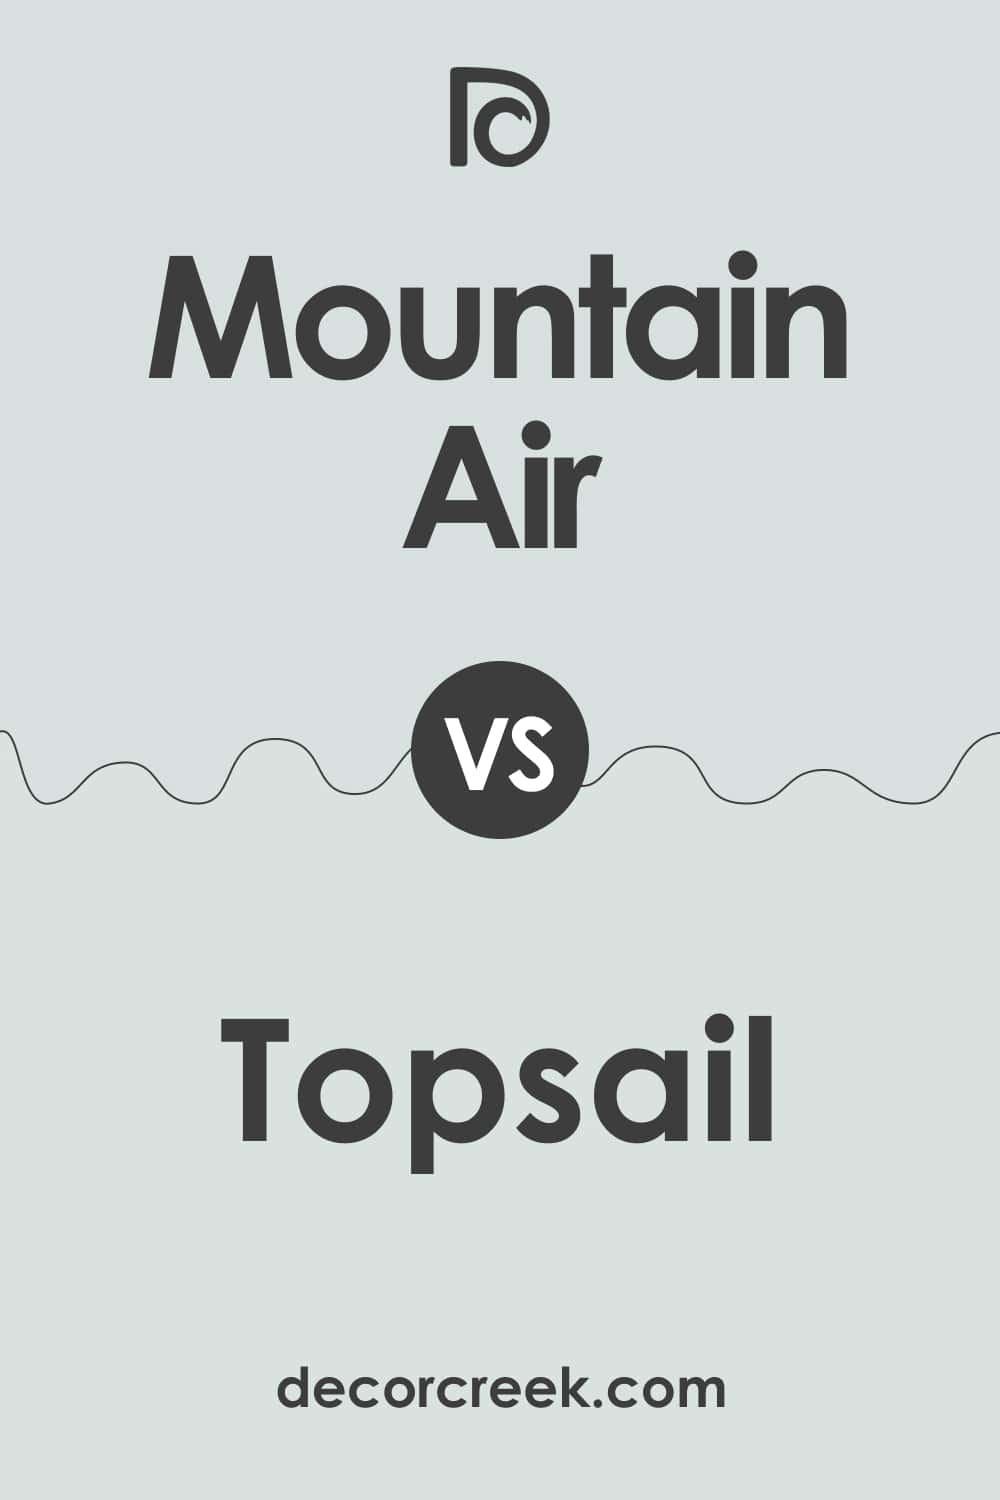 Mountain Air SW-6224 vs SW Topsail